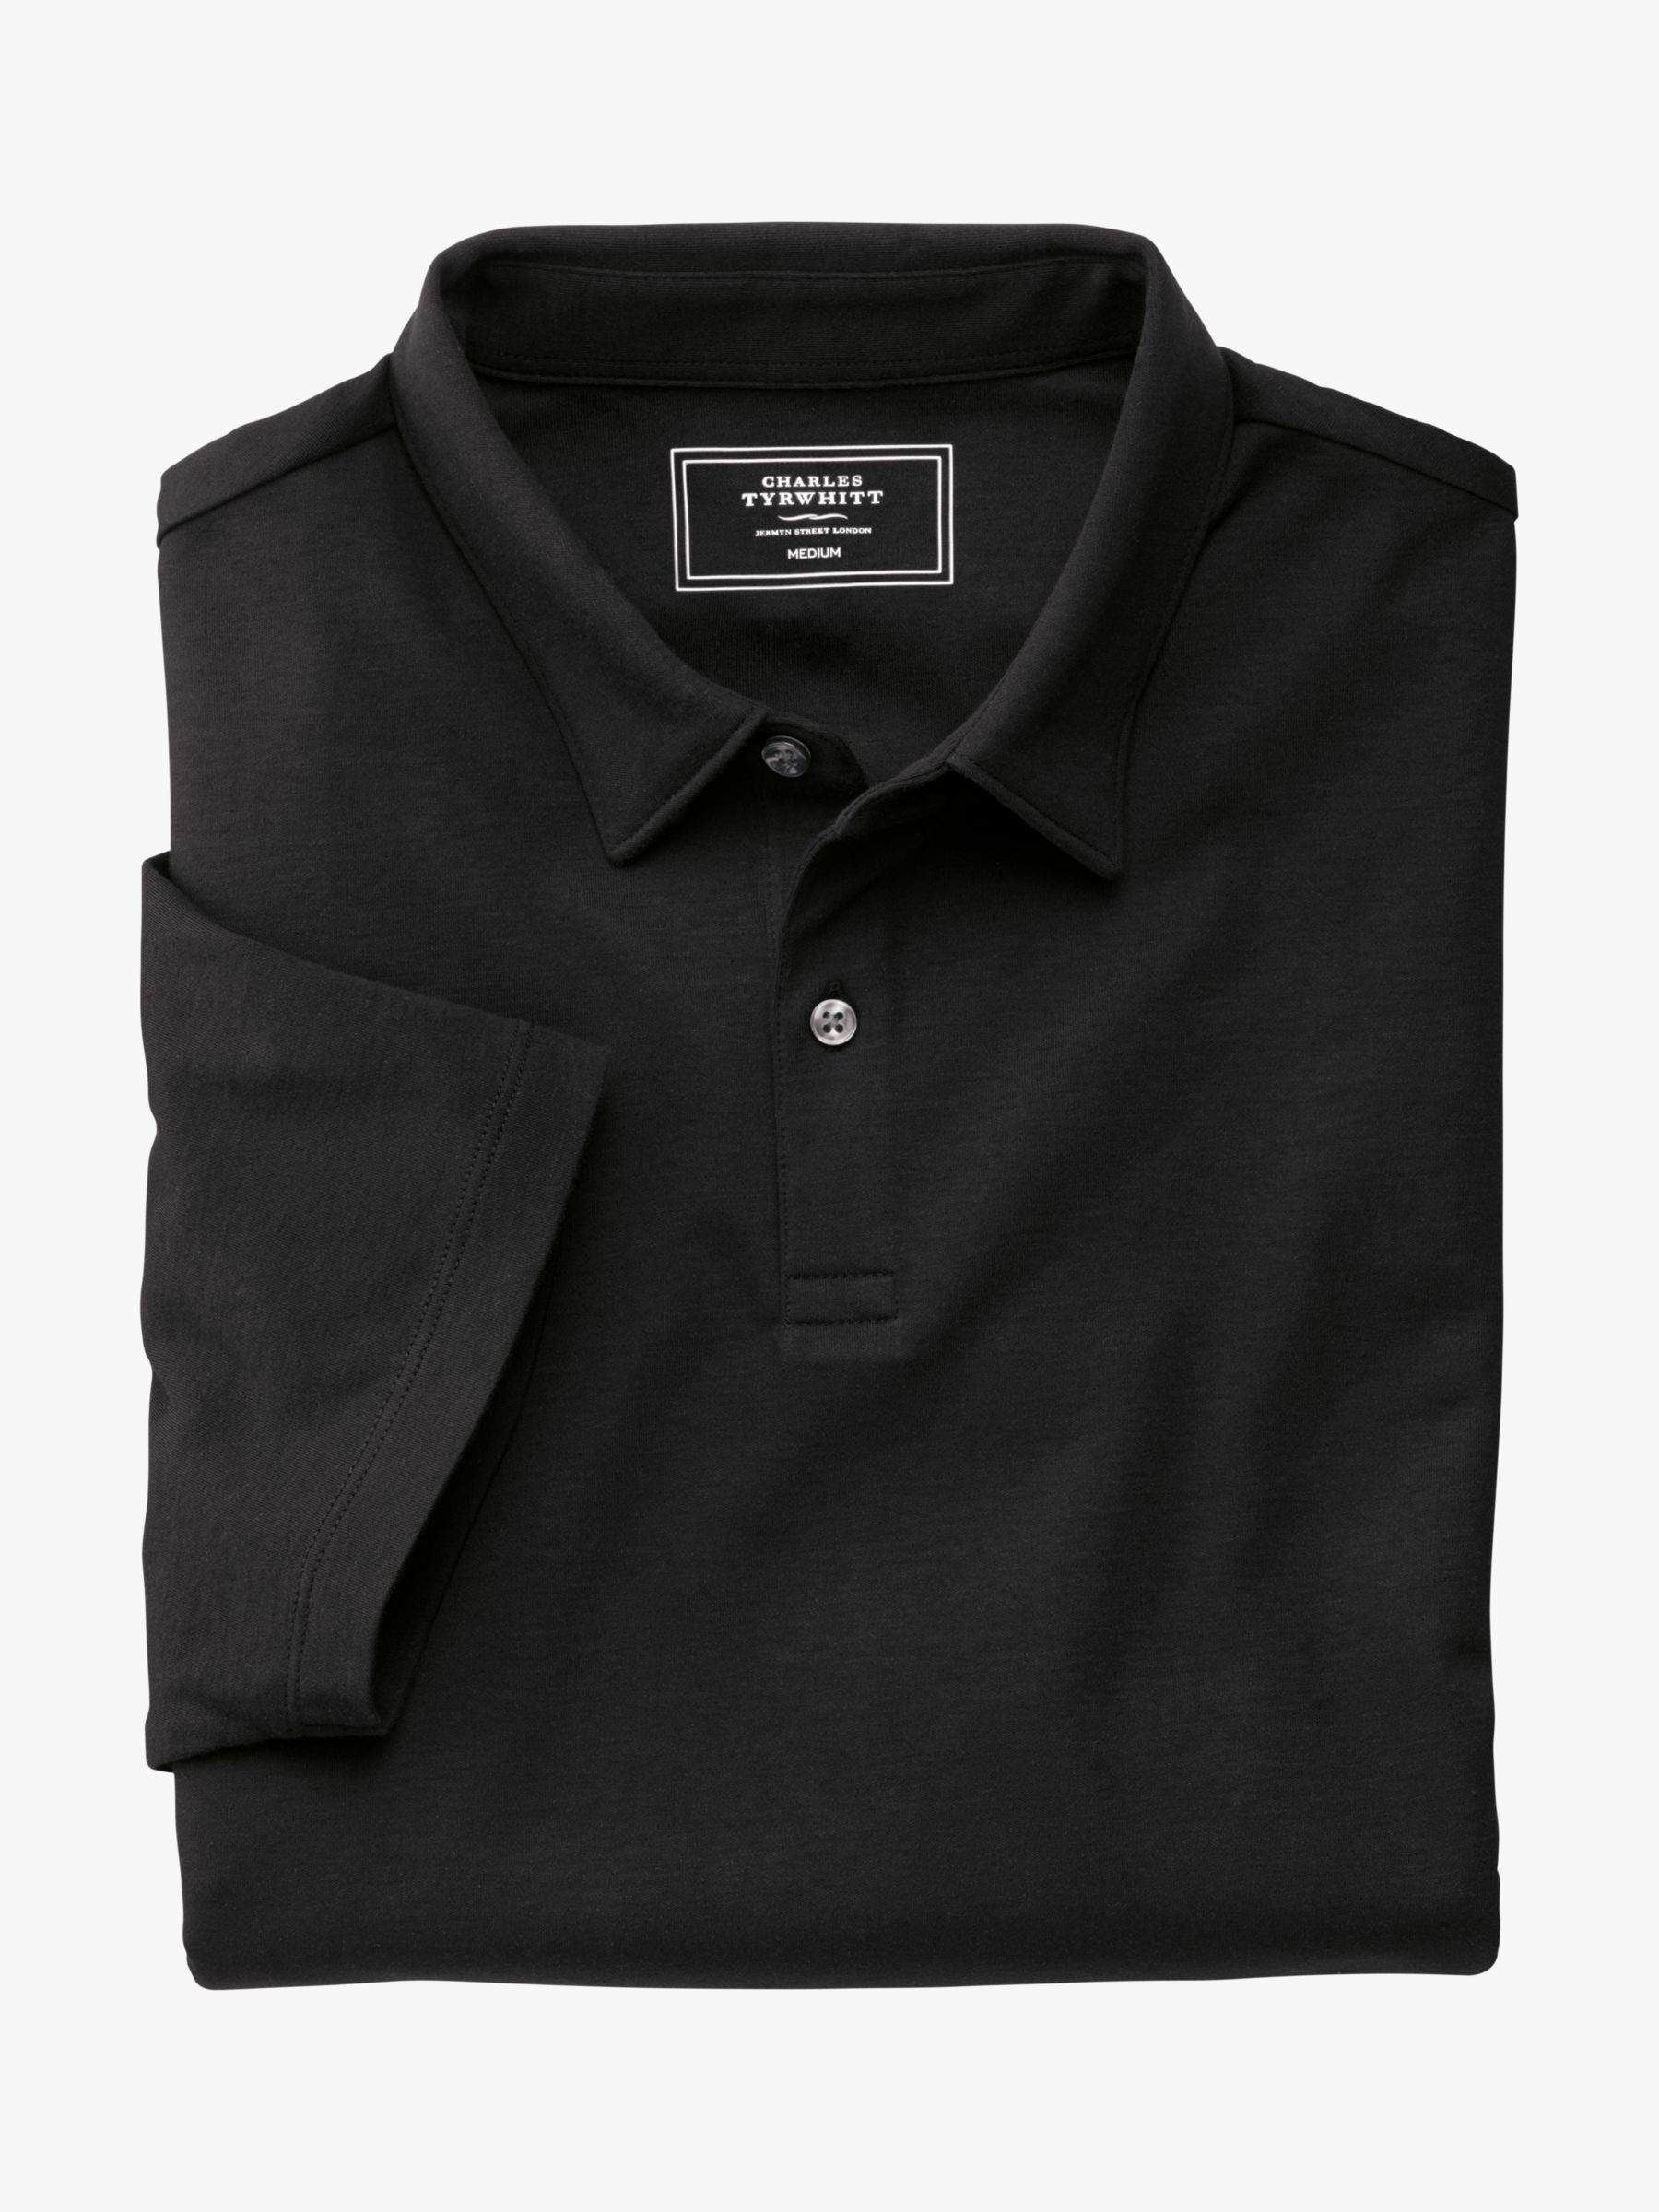 Buy Charles Tyrwhitt Smart Jersey Short Sleeve Polo Online at johnlewis.com